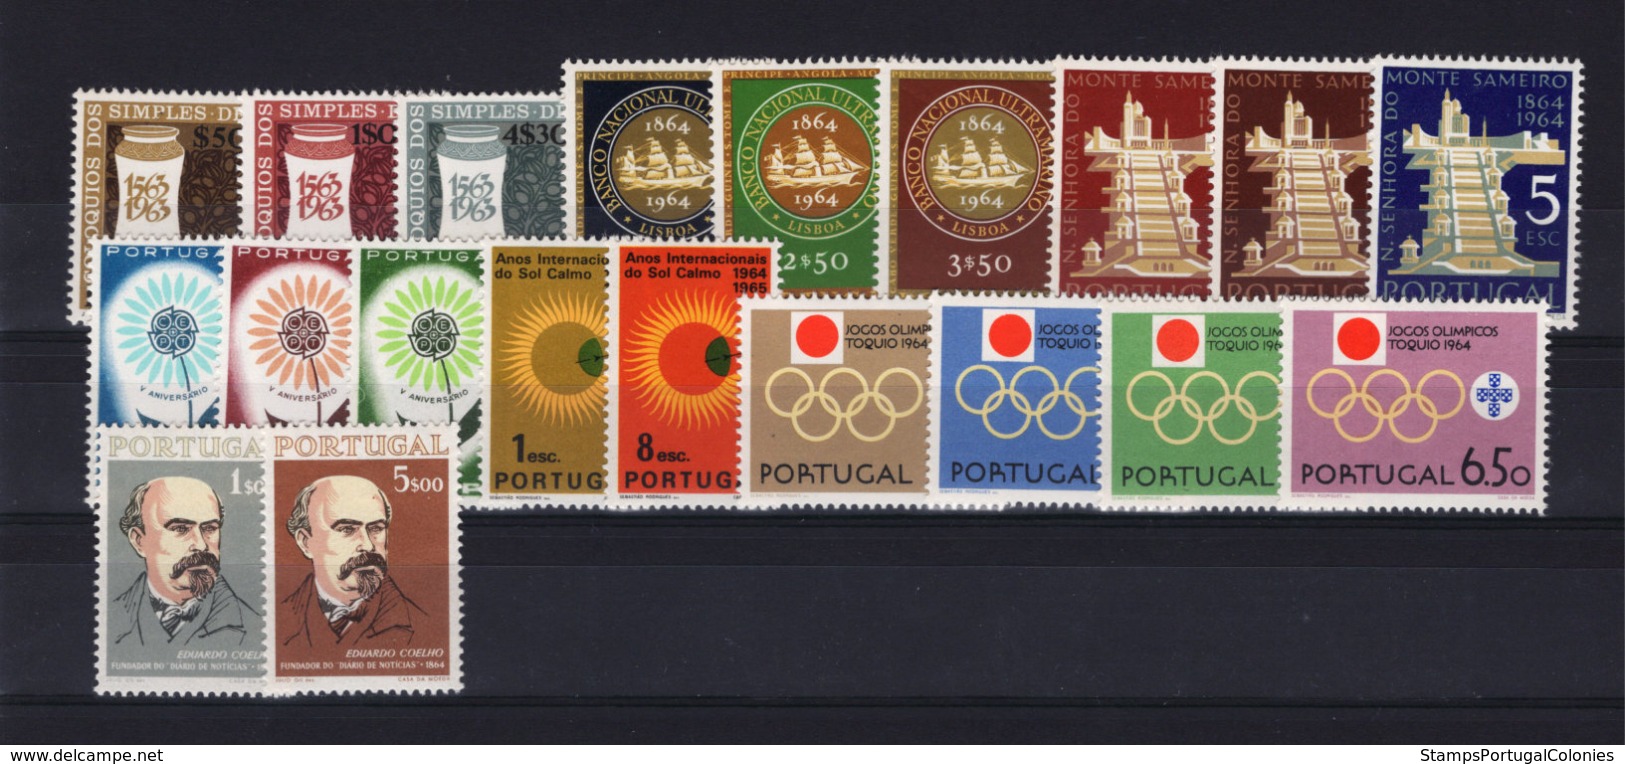 1964 Portugal Complete Year MNH Stamps. Année Compléte Timbres Neuf Sans Charnière. Ano Completo Novo Sem Charneira. - Années Complètes